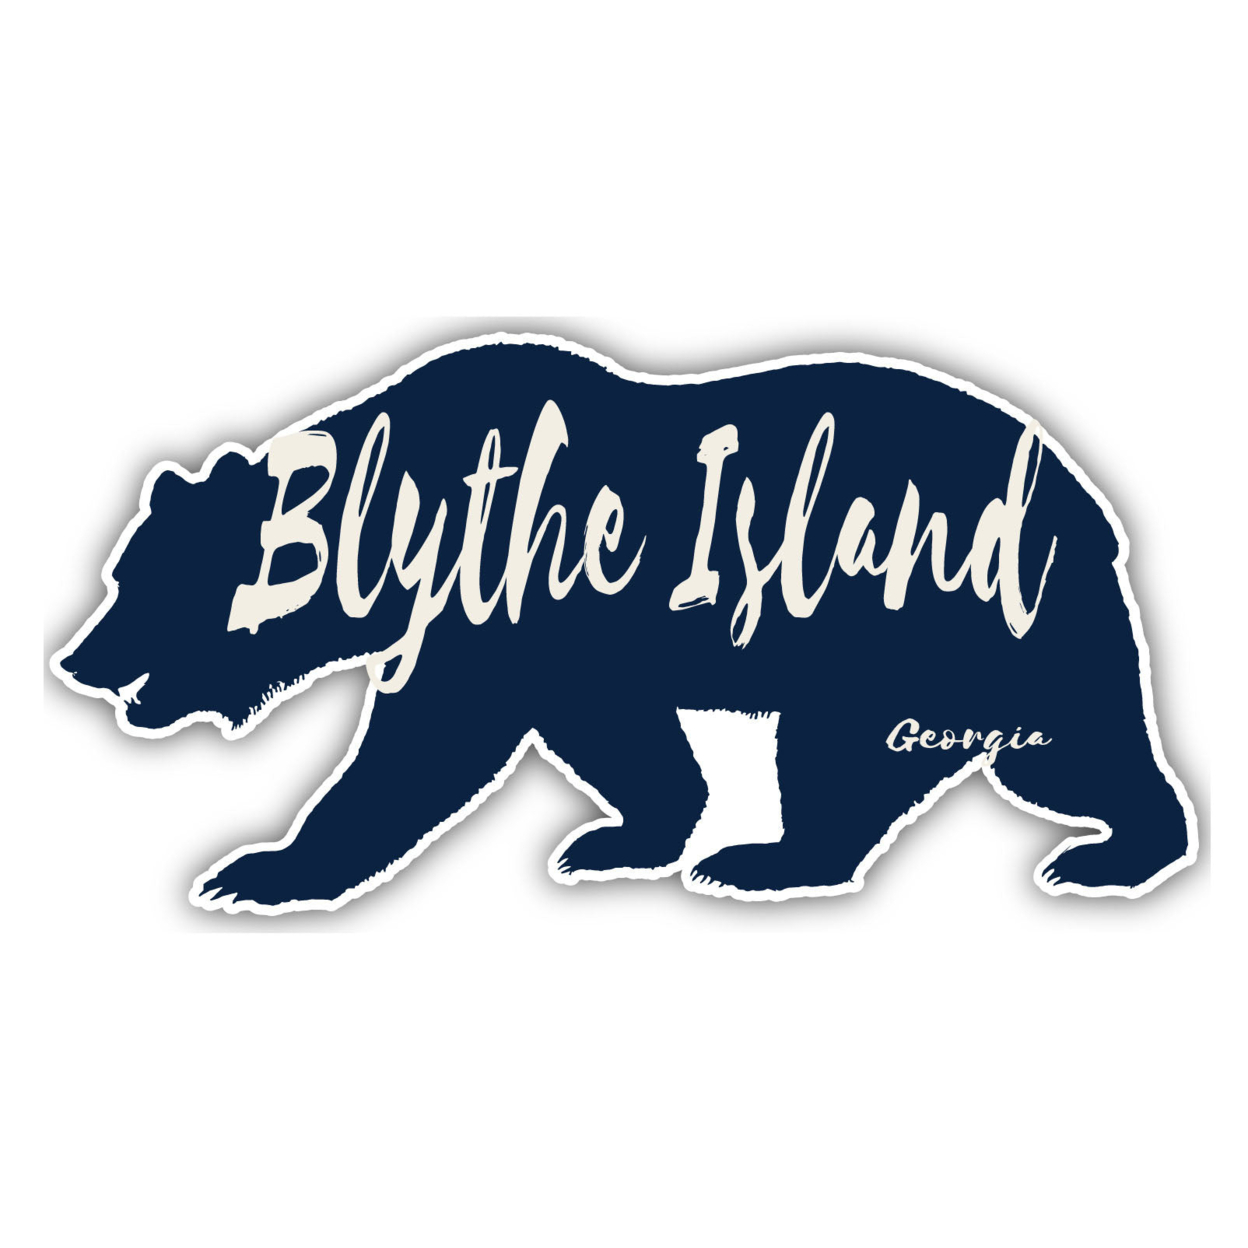 Blythe Island Georgia Souvenir Decorative Stickers (Choose Theme And Size) - Single Unit, 12-Inch, Tent